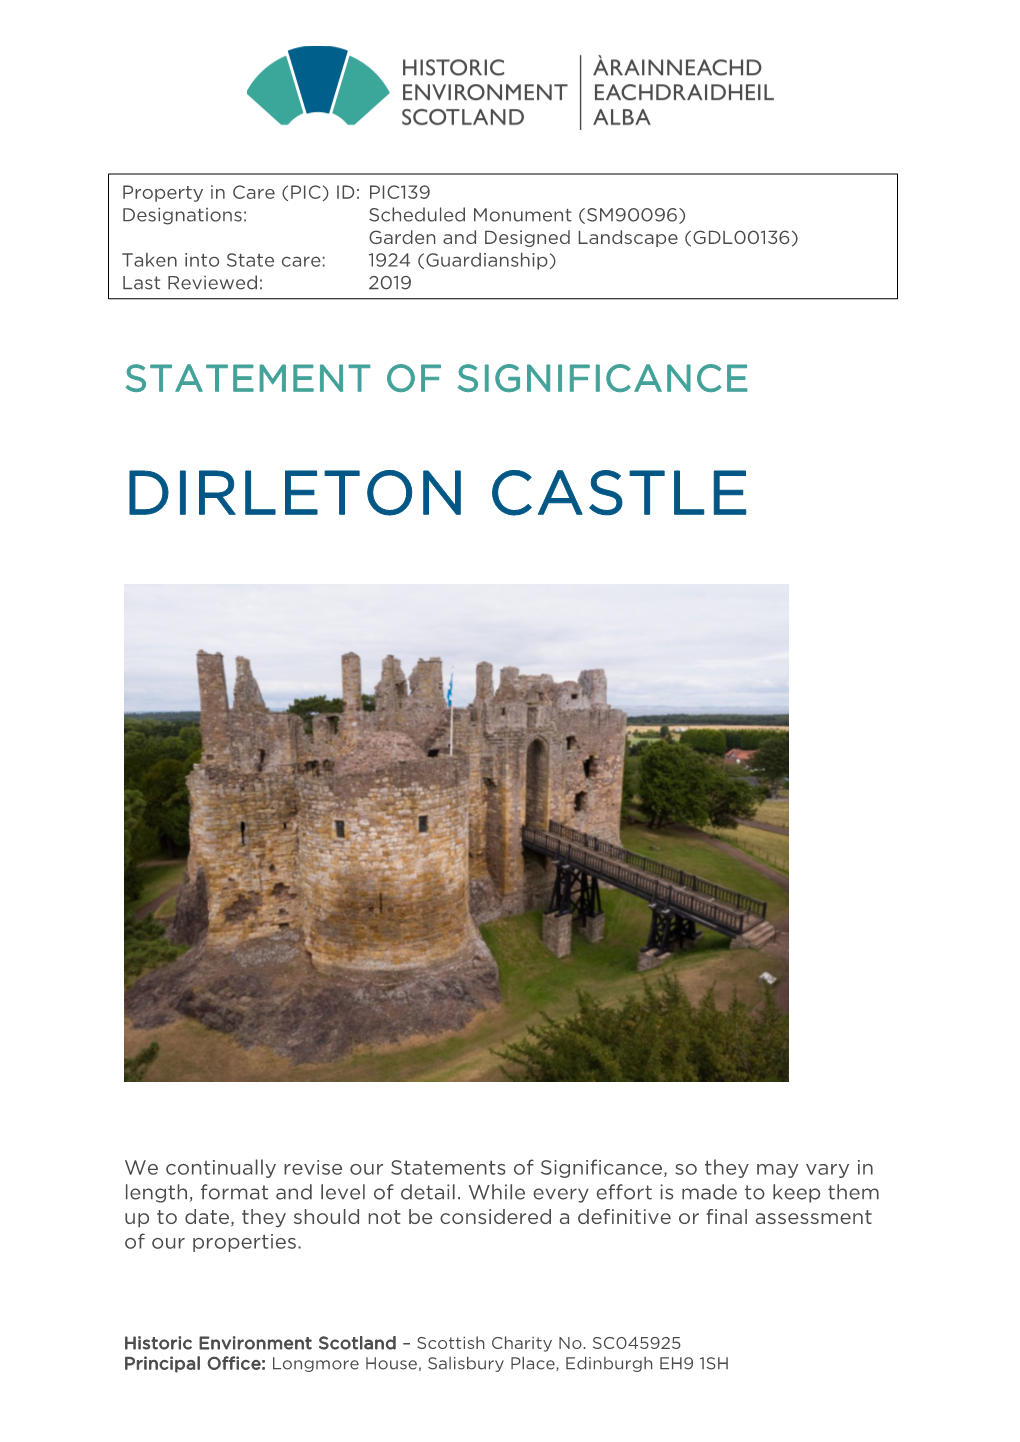 Dirleton Castle Statement of Significance